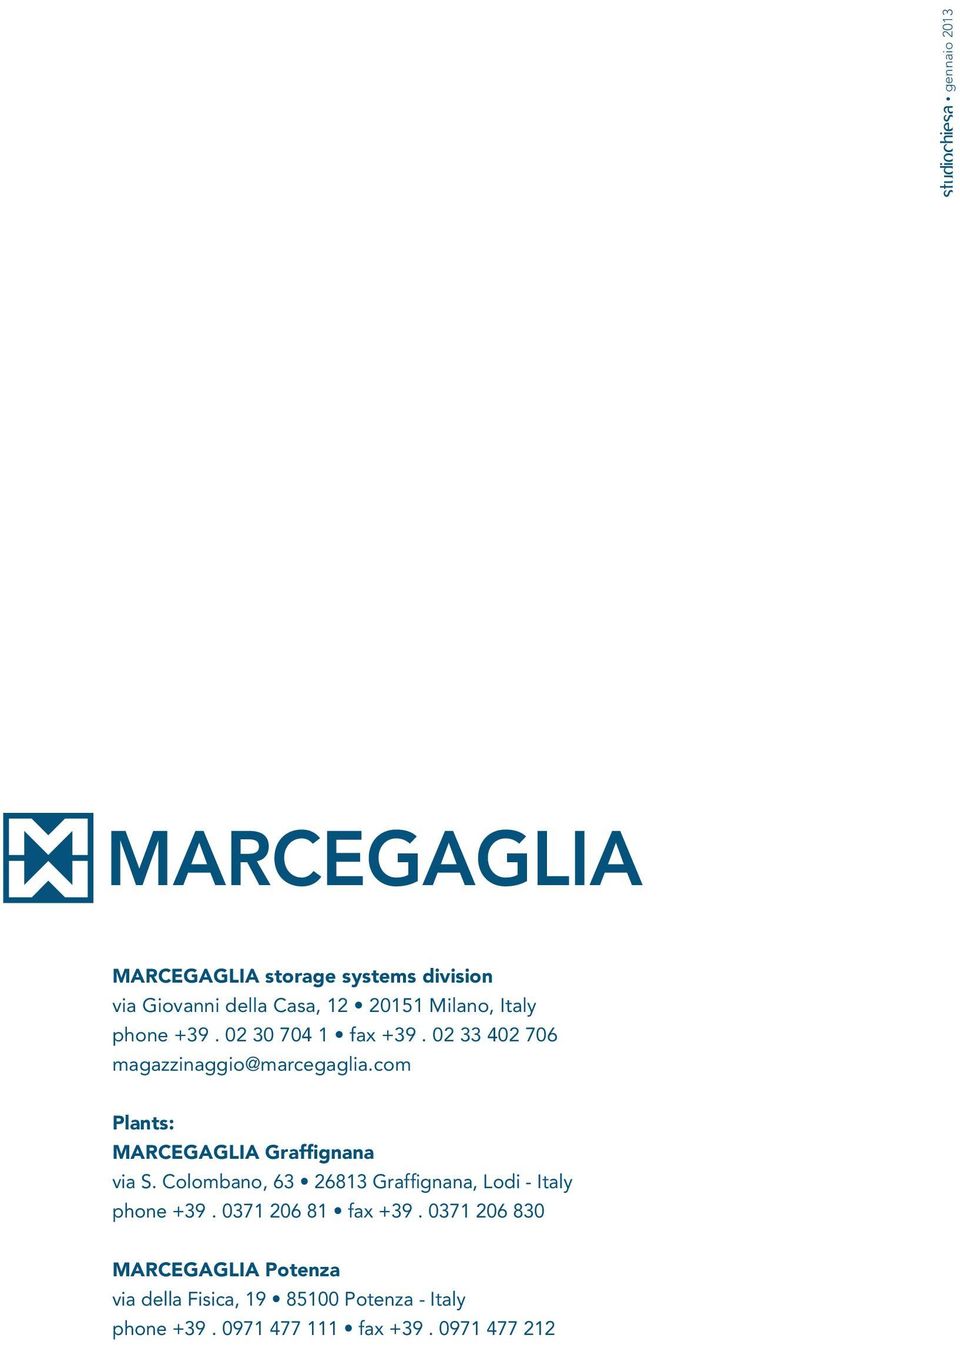 com Plants: MARCEGAGLIA Graffignana via S. Colombano, 63 26813 Graffignana, Lodi - Italy phone +39.